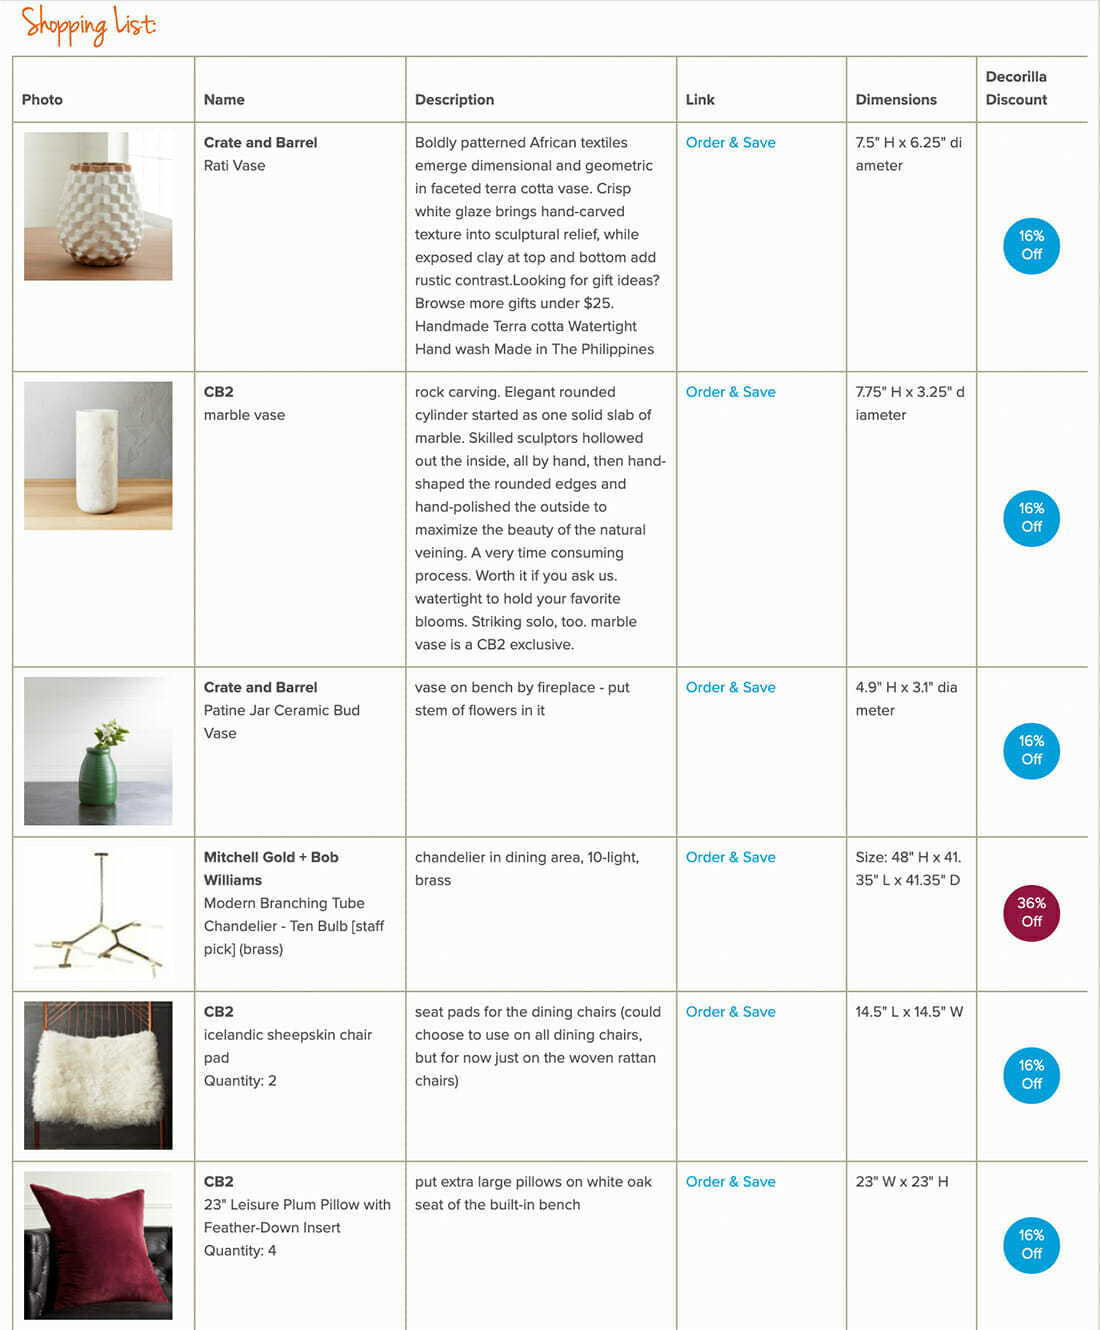 Decorilla Online Shopping List for Modern Rustic Decor